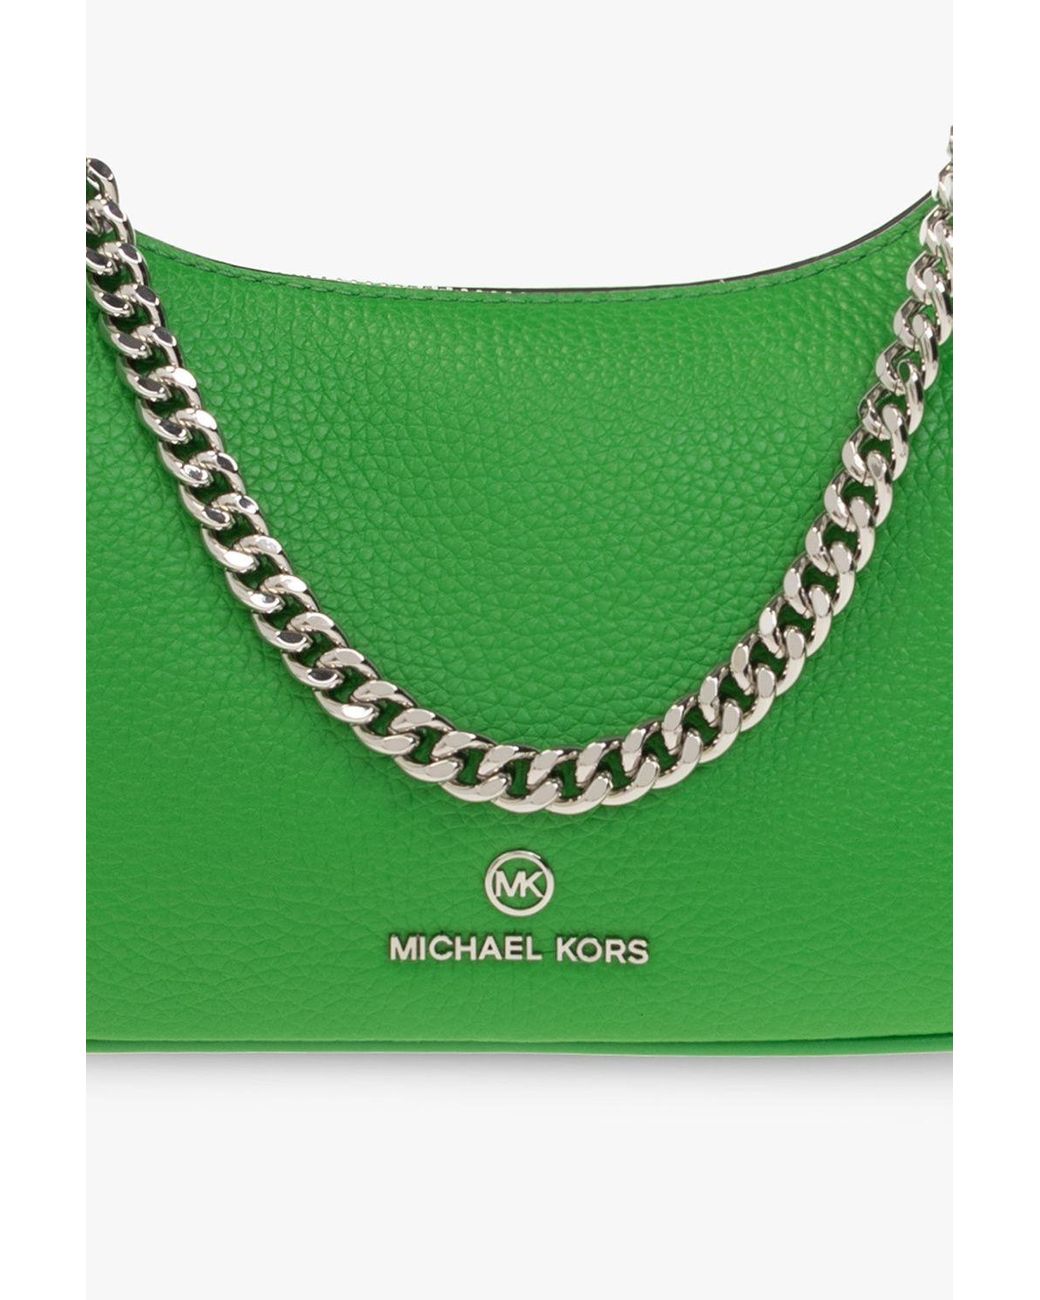 Michael Kors Piper Small Presbyopic Chain Shoulder Bag - Light Sage